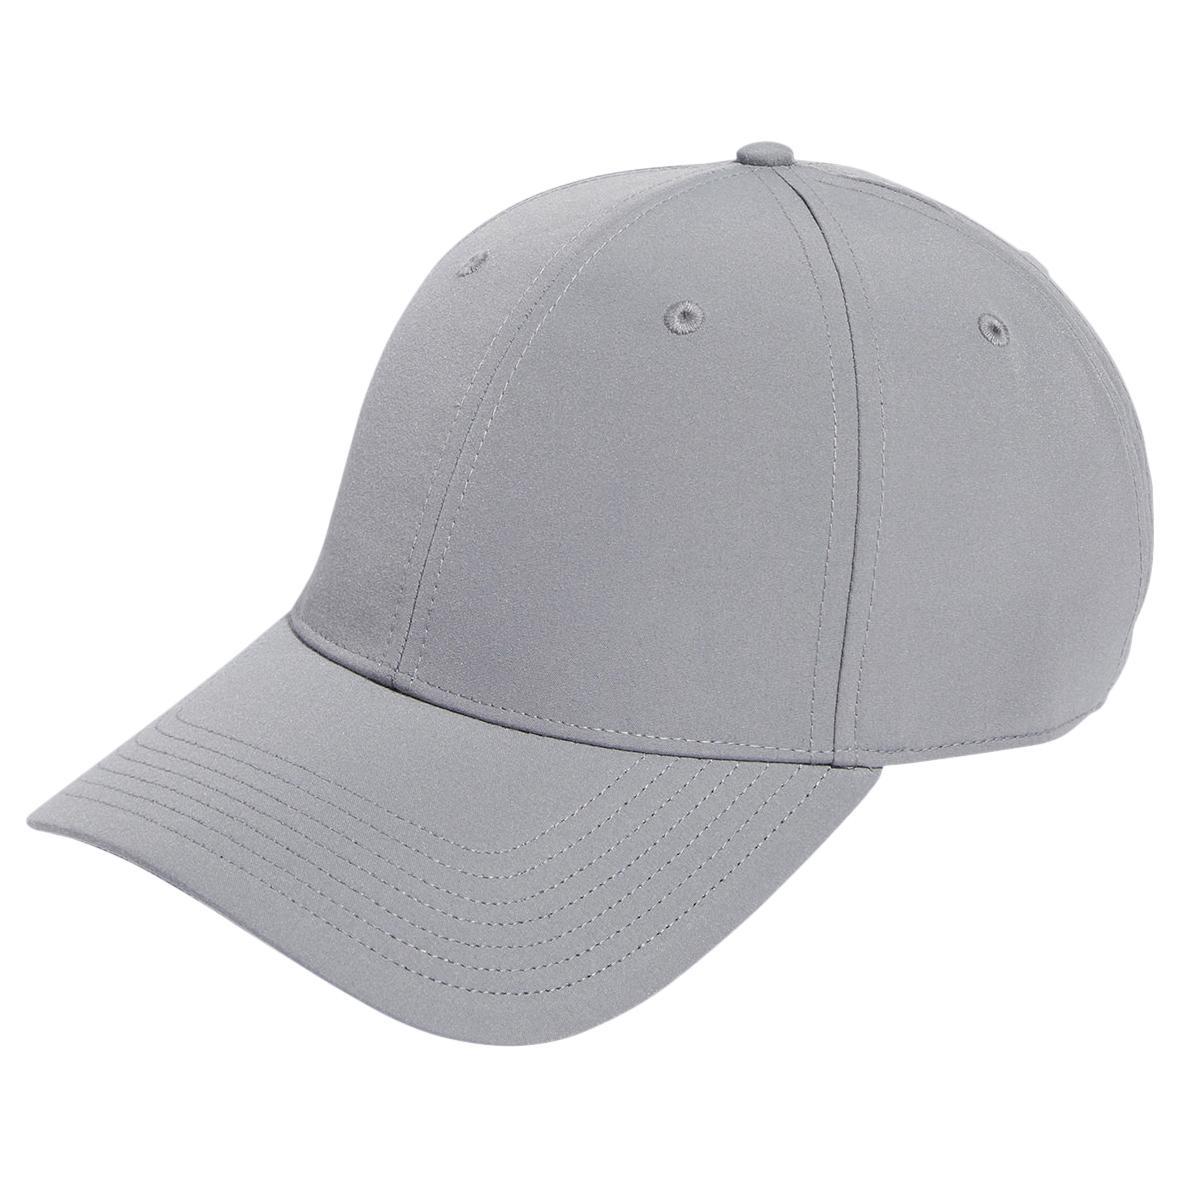 Adidas Unisex Adult Crestable Performance Golf Cap (Grey) (One Size)